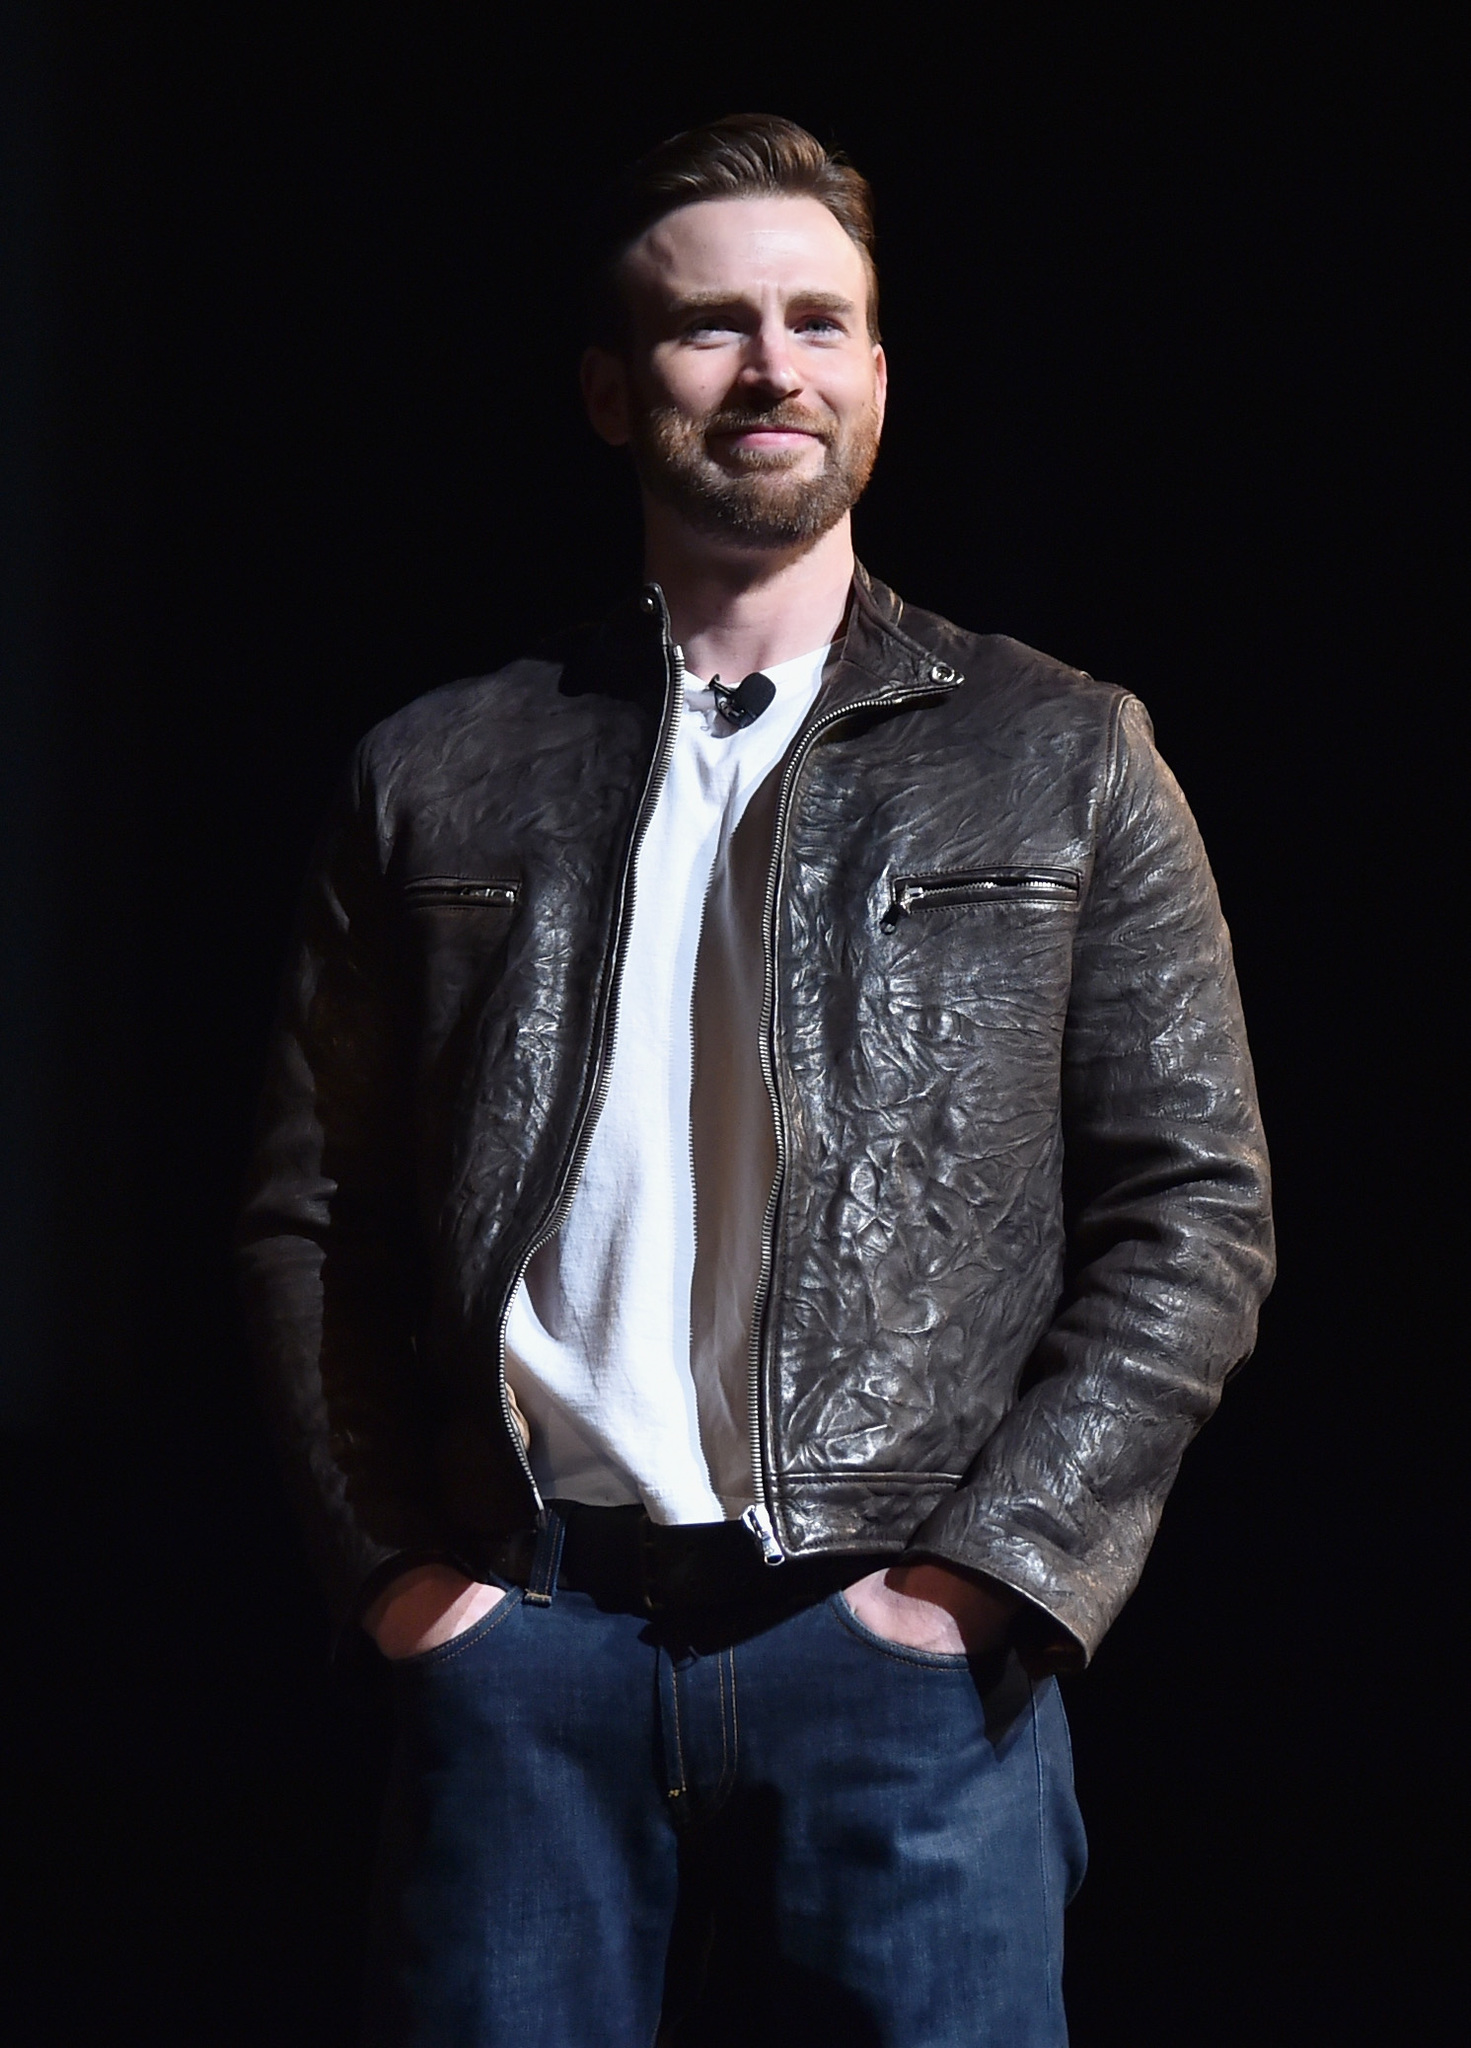 Chris Evans at event of Captain America: Civil War (2016)